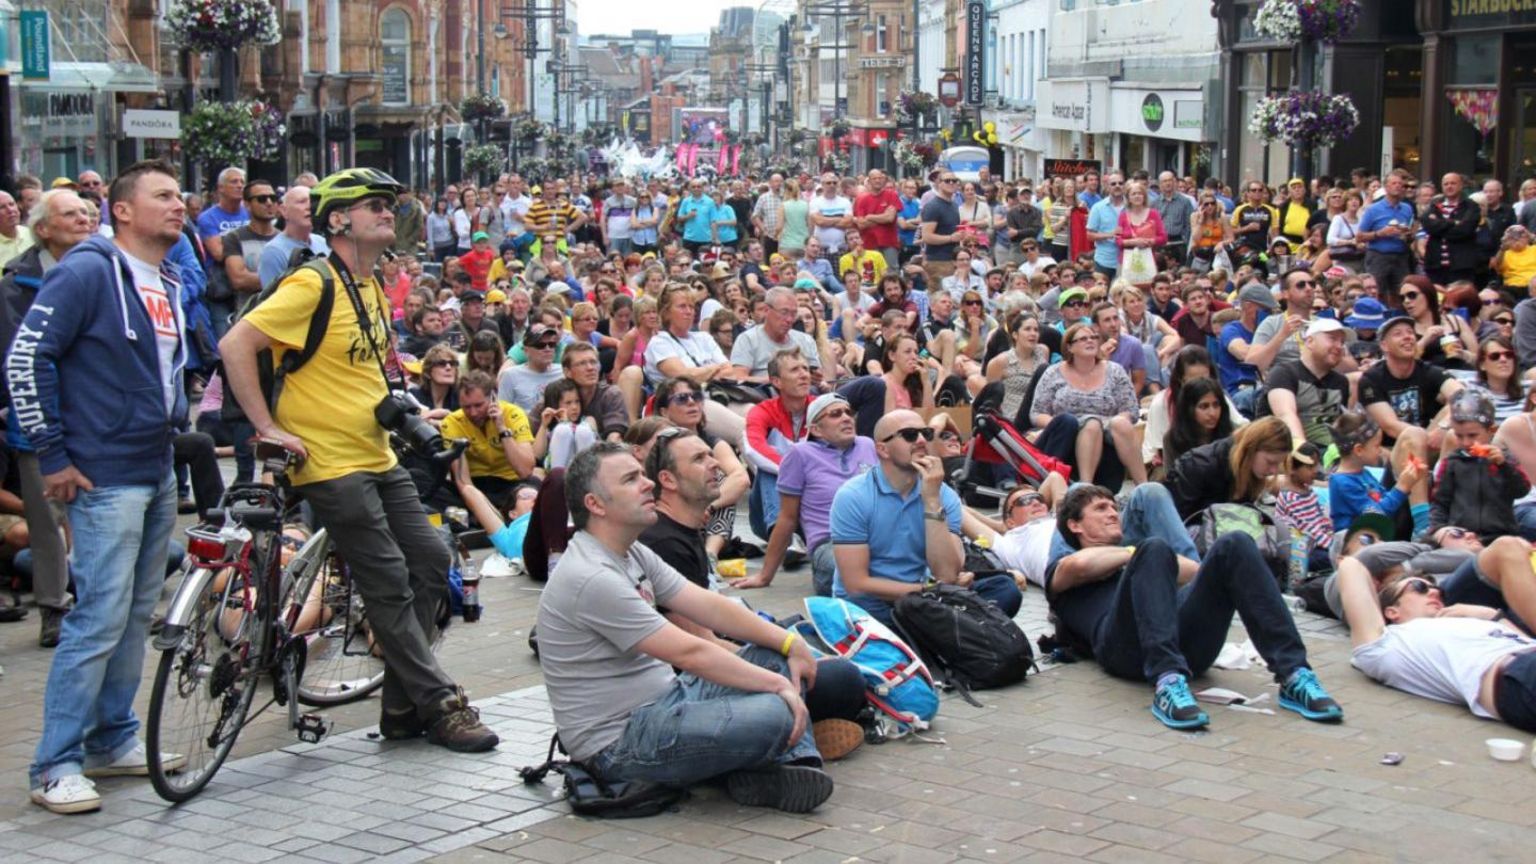 Crowds gather on Briggate, Leeds for the 2014 Tour de France